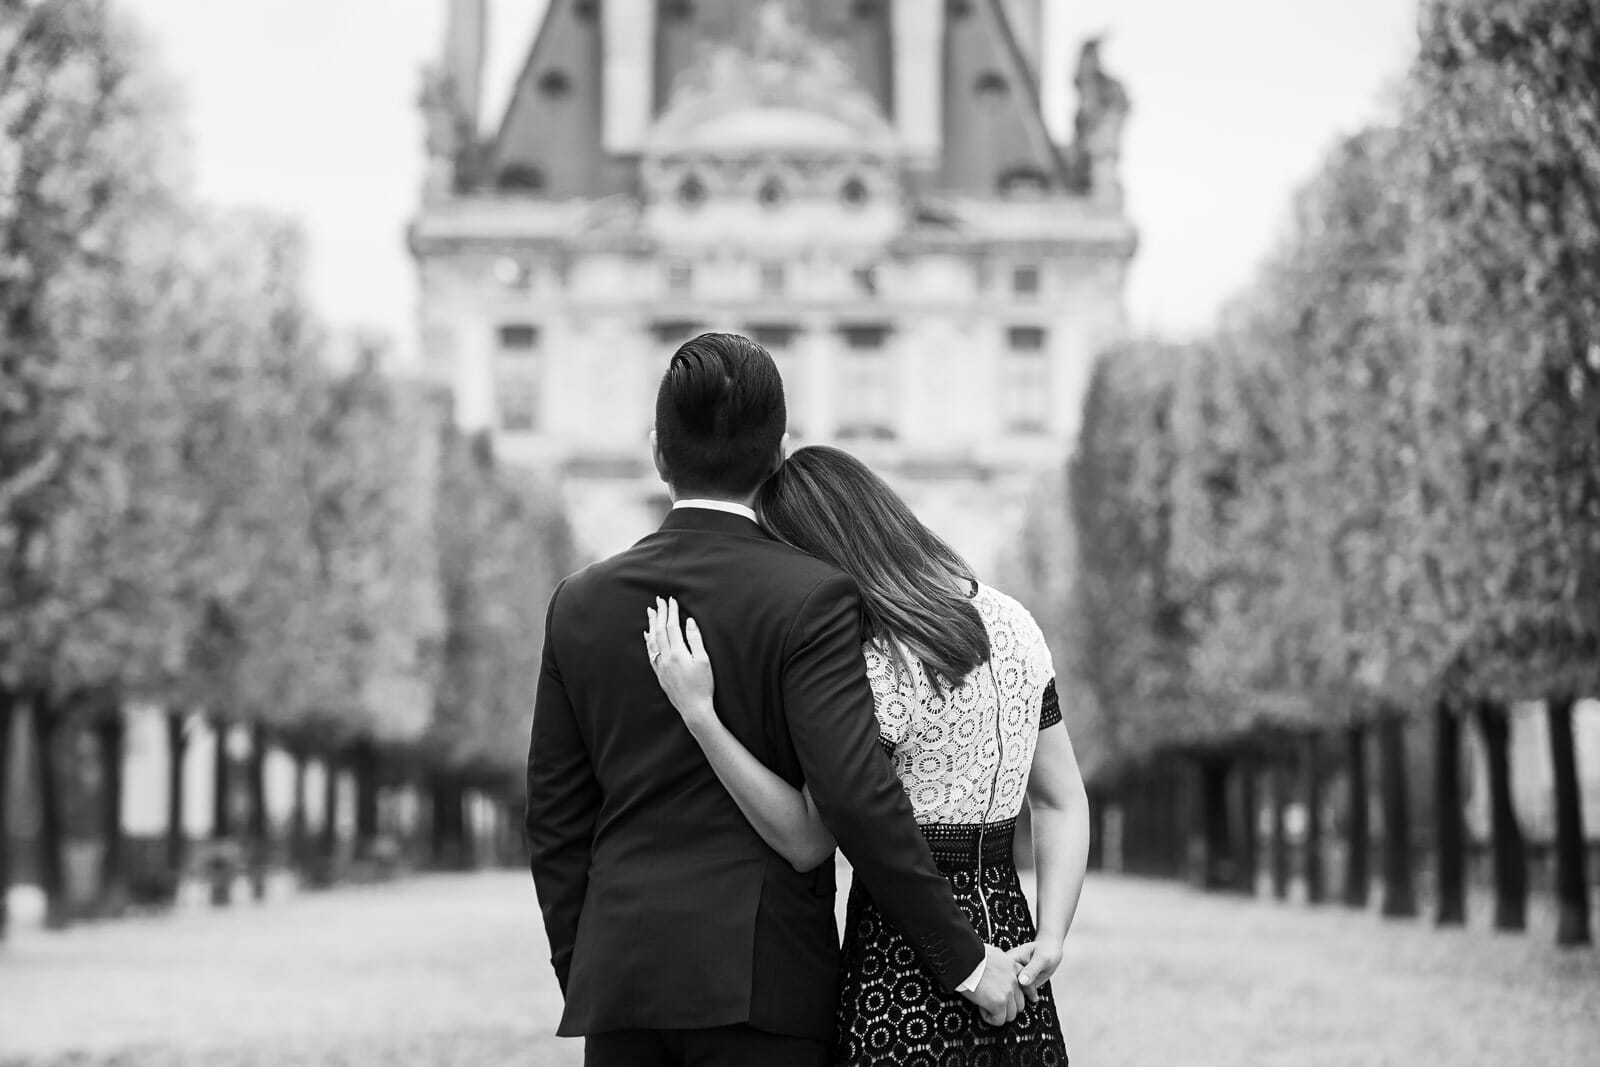 Paris couple package: Beautiful couple photos in the Tuileries Garden Paris